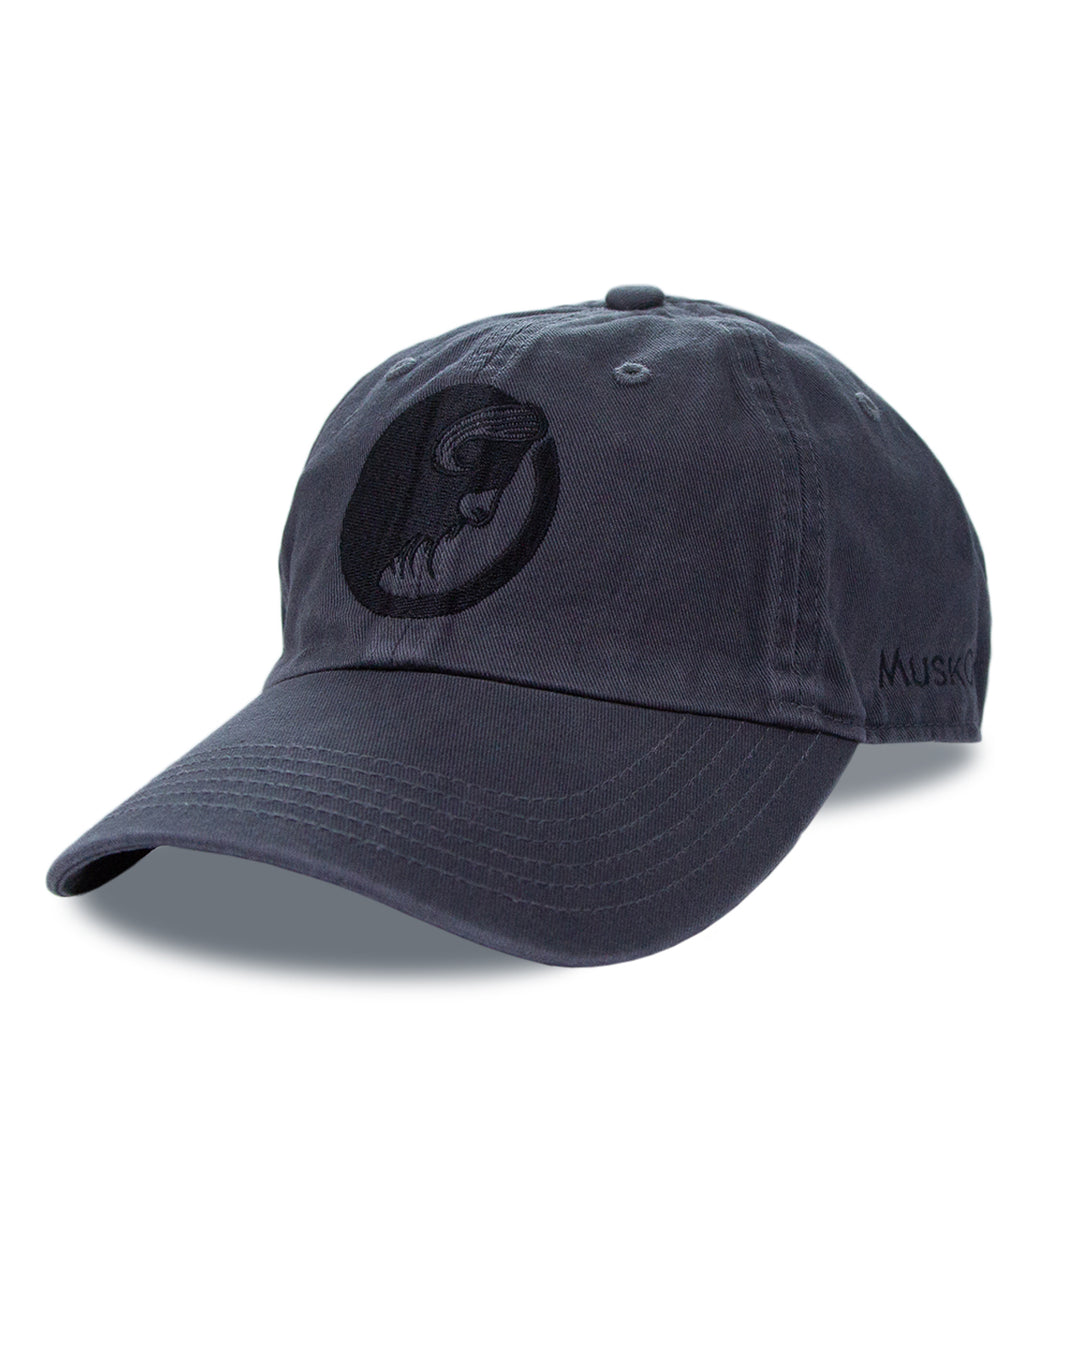 MuskOx Logo Hat in Grey Heavyweight Chino Cotton